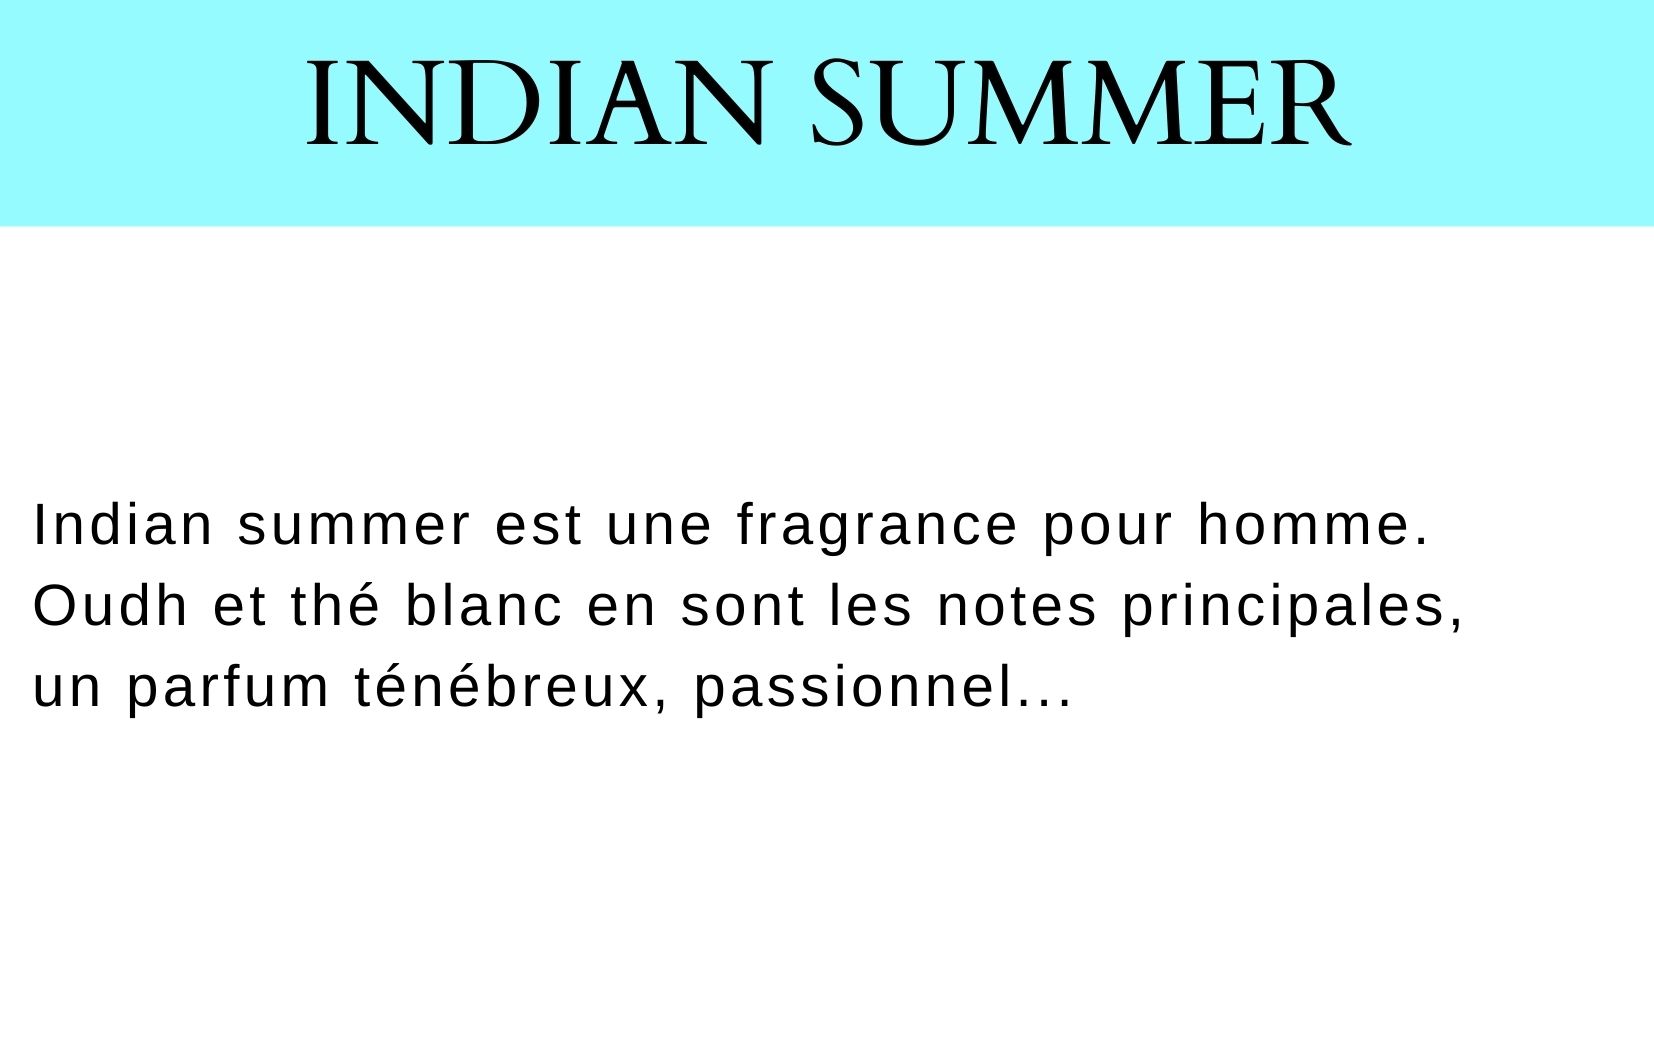 Indian summer description fragrance